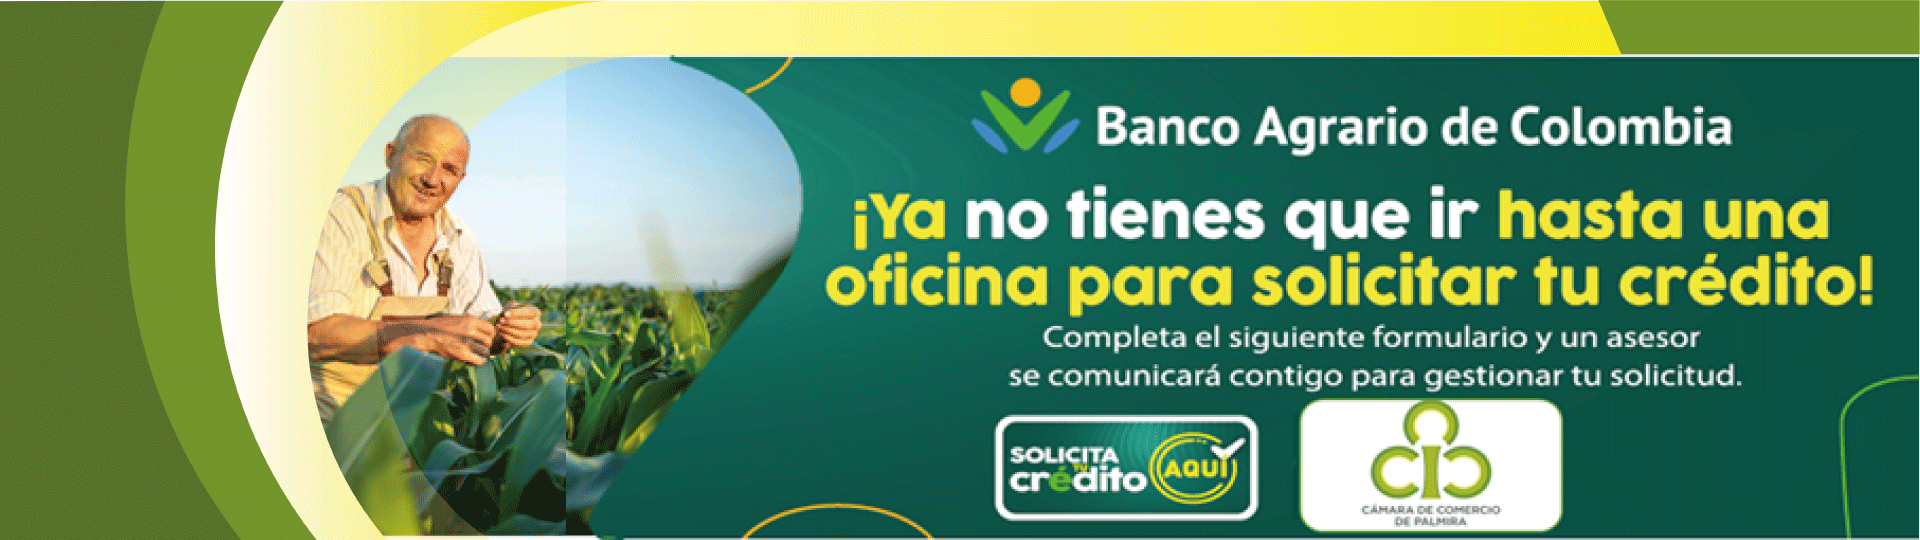 Banner Crédito Digital Banco Agrario